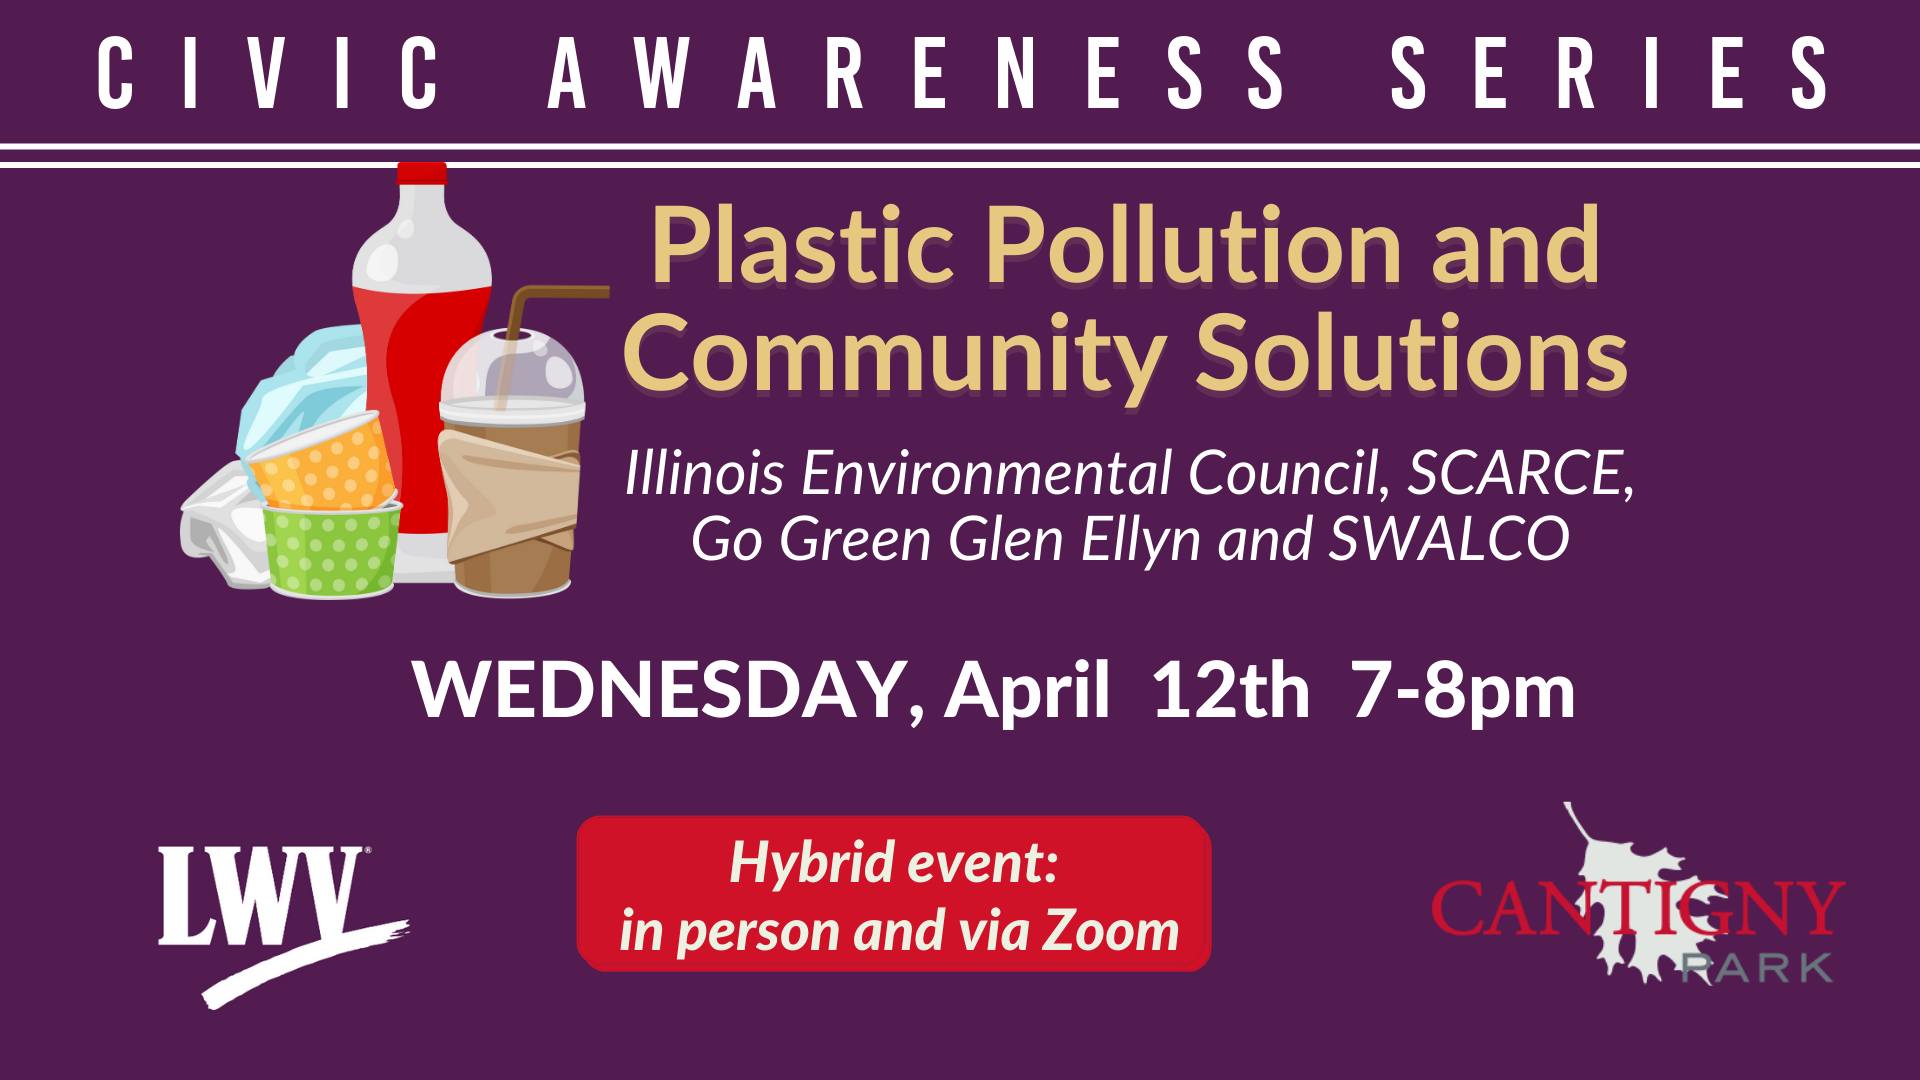 Civic Awareness Program, Wednesday, April 12, Plastic Pollution & Community Solutions